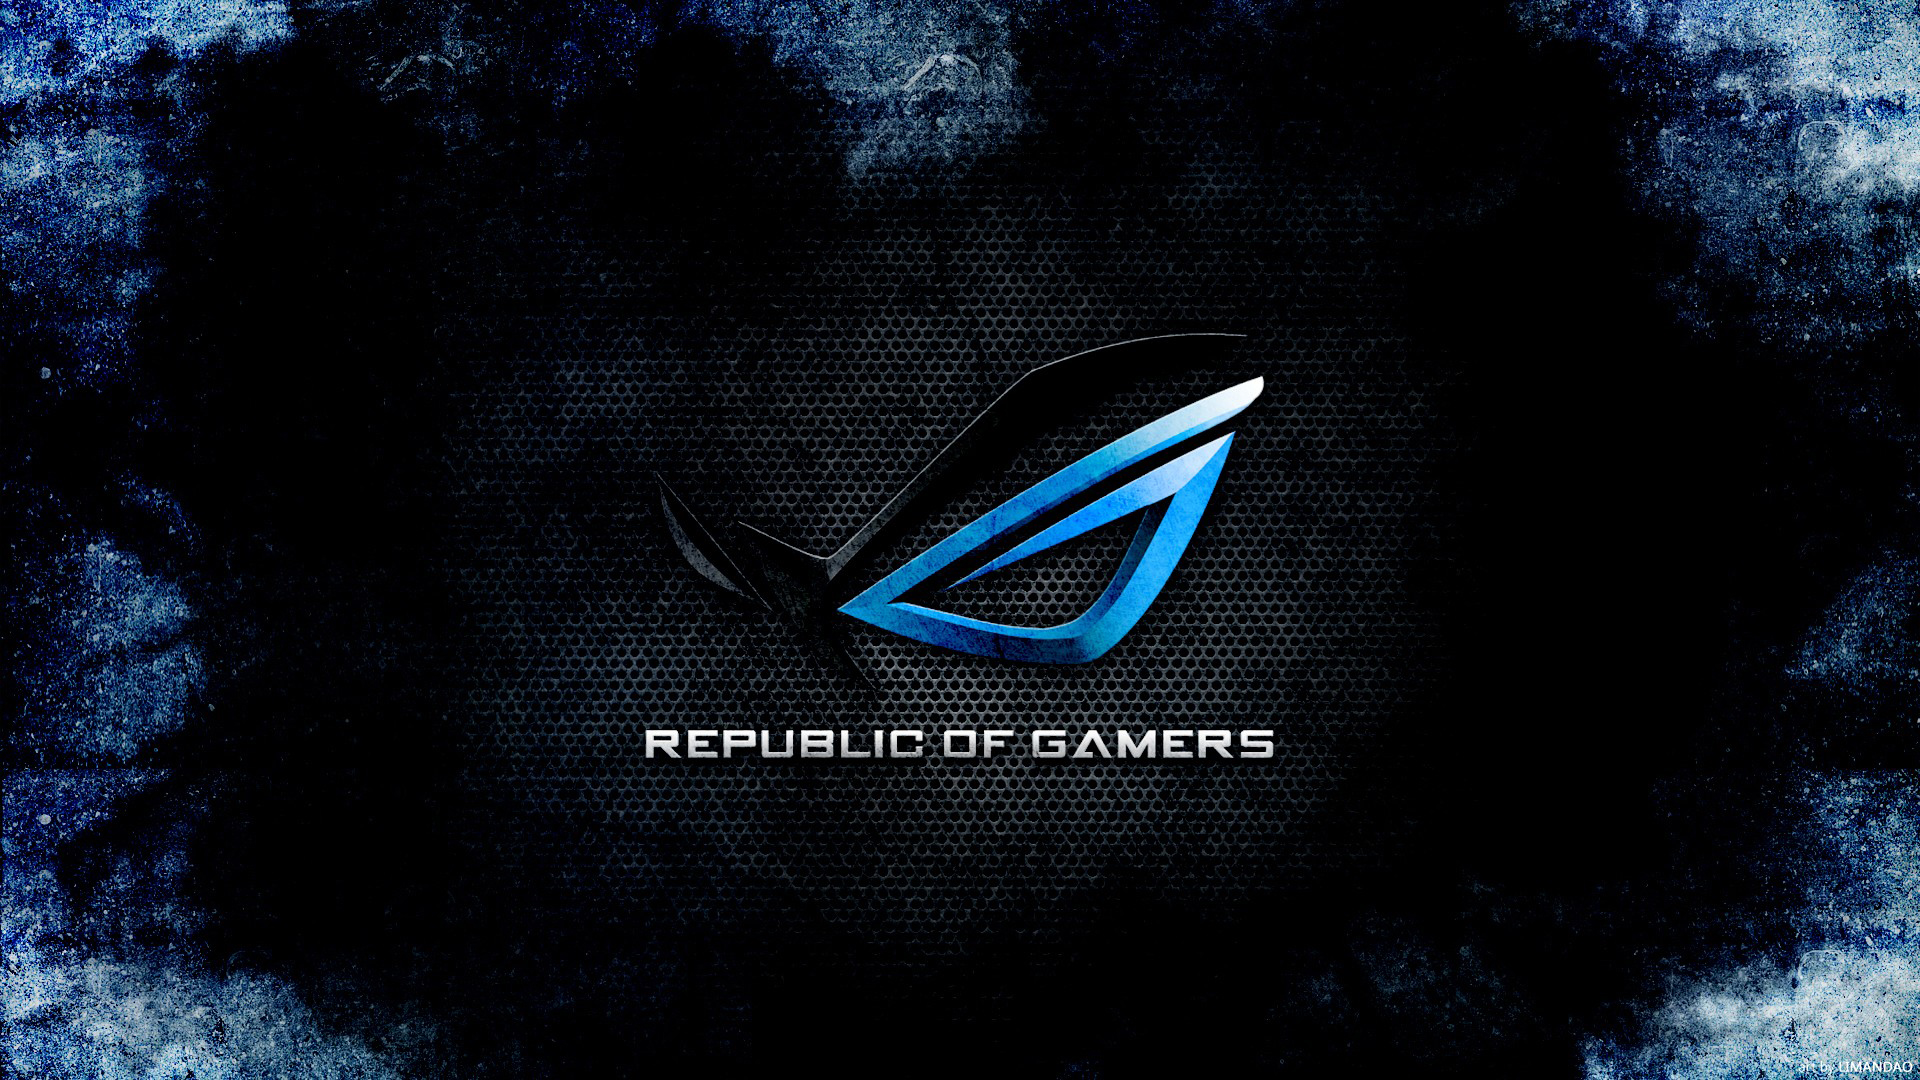 asus rog republic of gamers logo dark blue hd 1920x1080 1080p 1920x1080